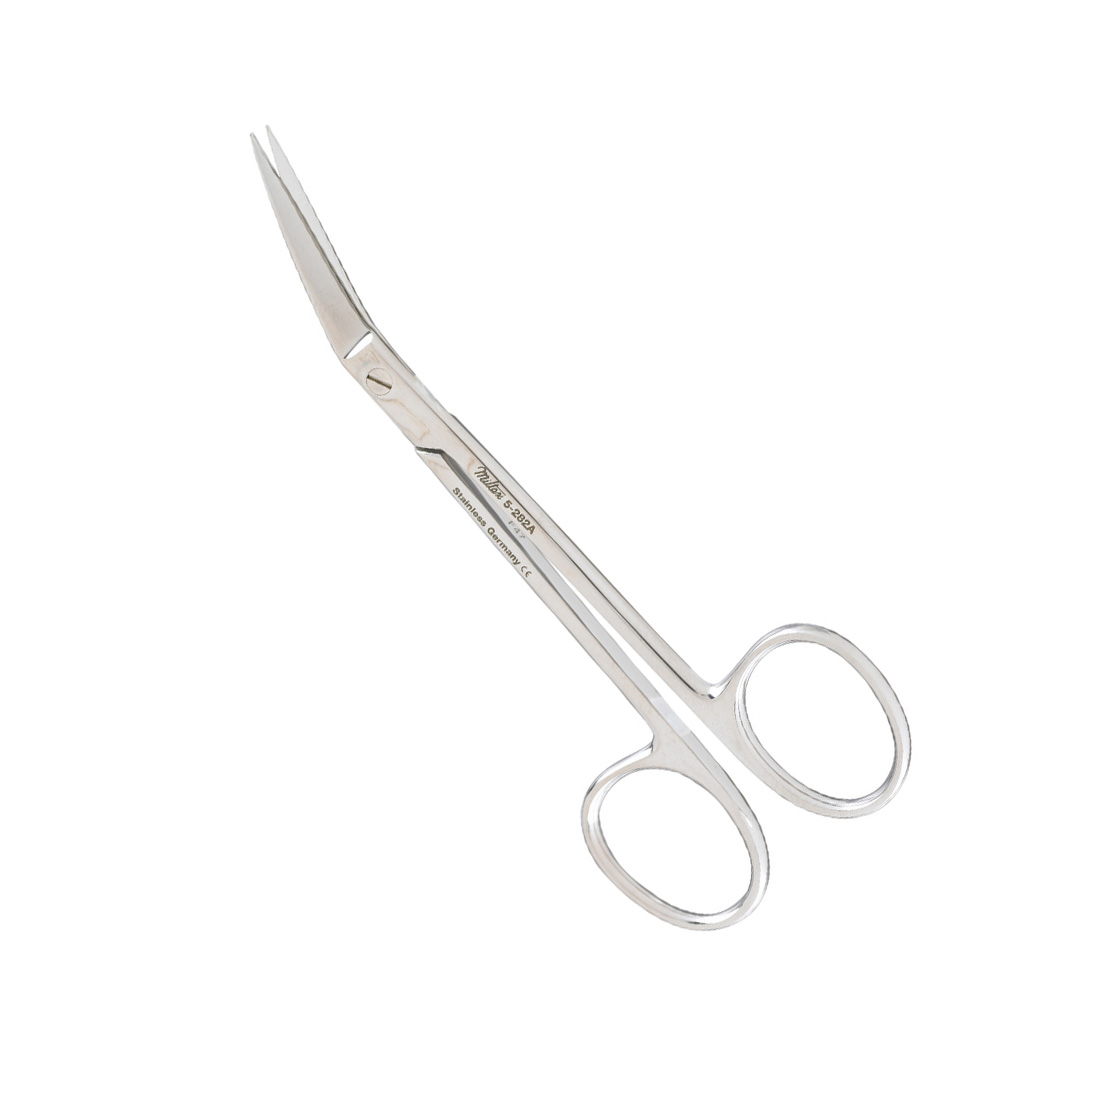 Wagner Plastic Surgery Scissors, Straight, Sharp-Sharp Points, Angled, Serrated Blades